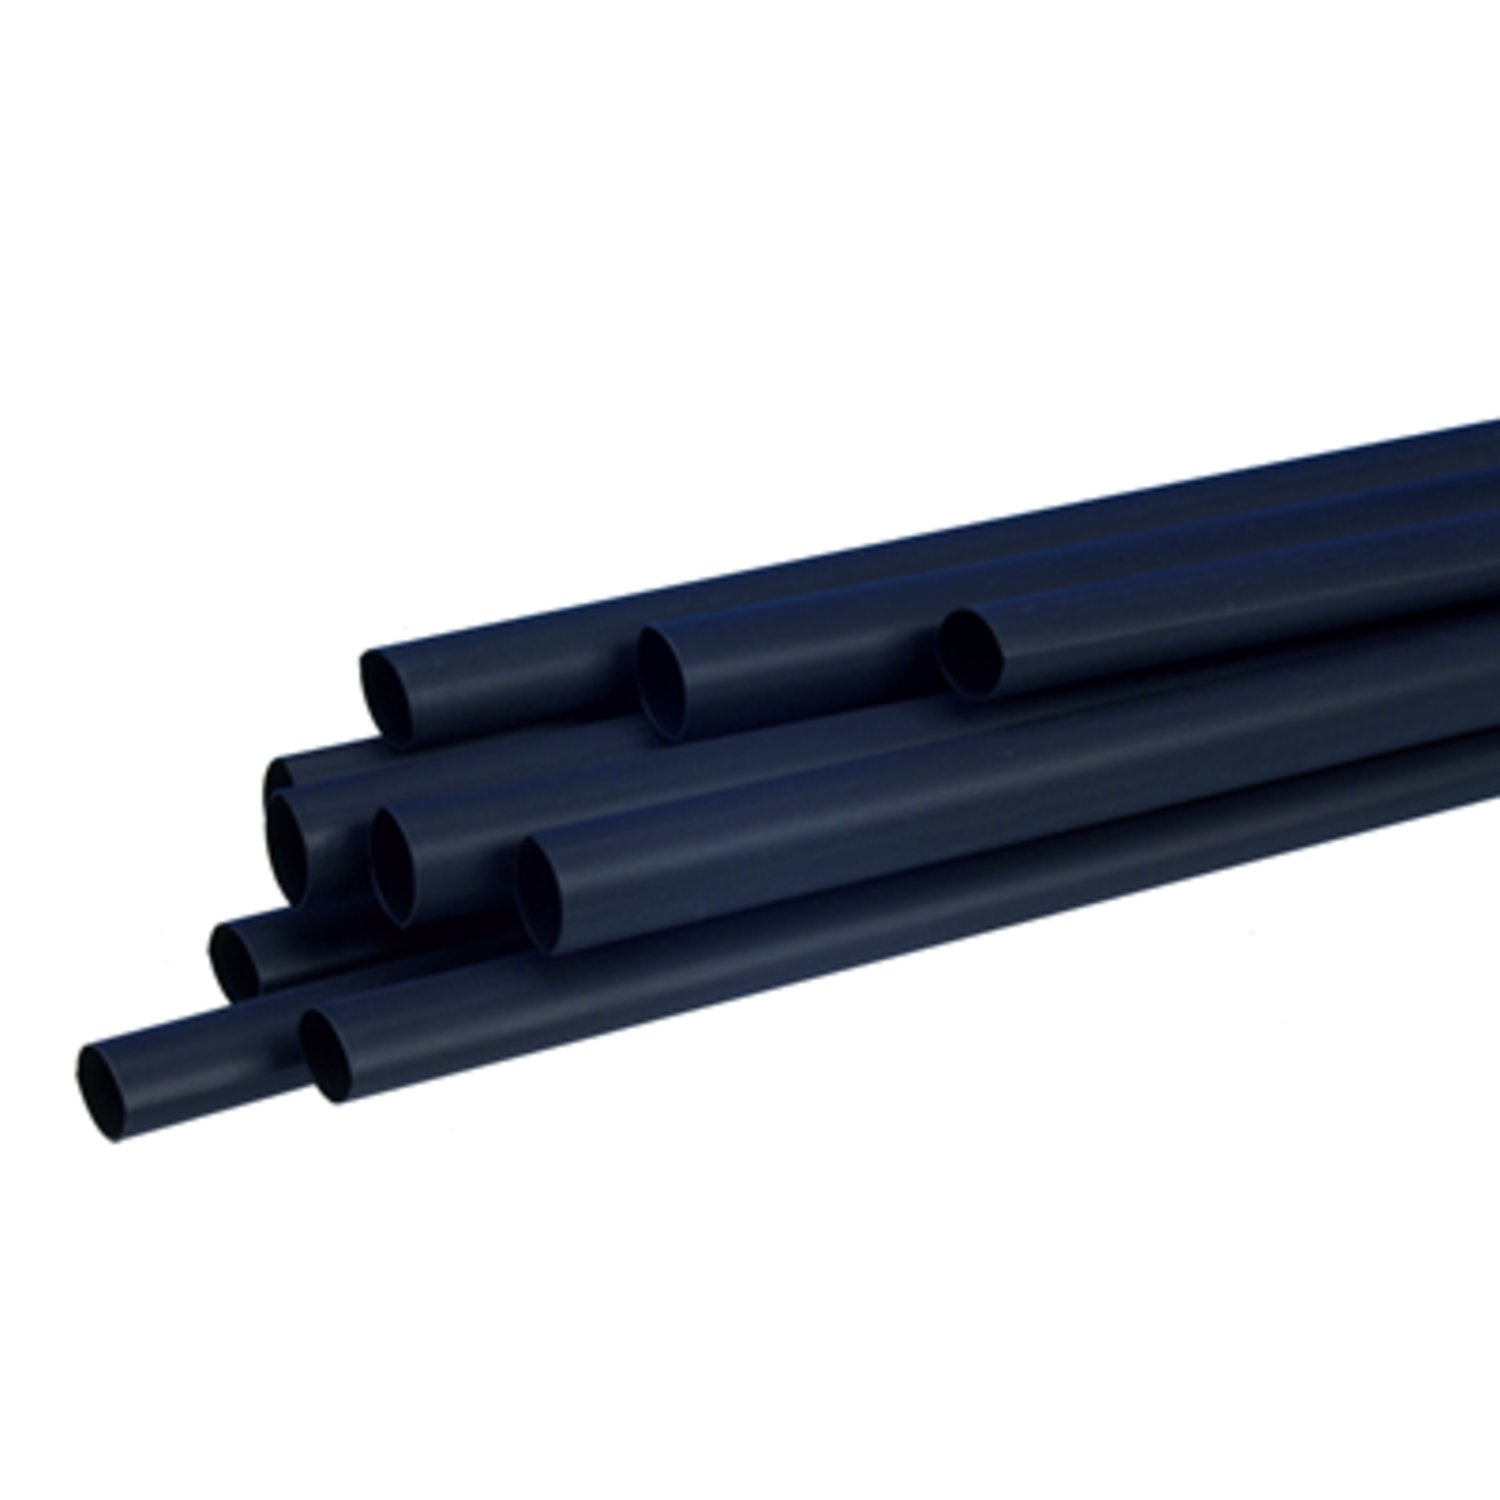 7100025273 - 3M SFTW-203 1/2" Heat Shrink Tubing Polyolefin, Black, 12.0/4.0 mm,
1.22 m Piece